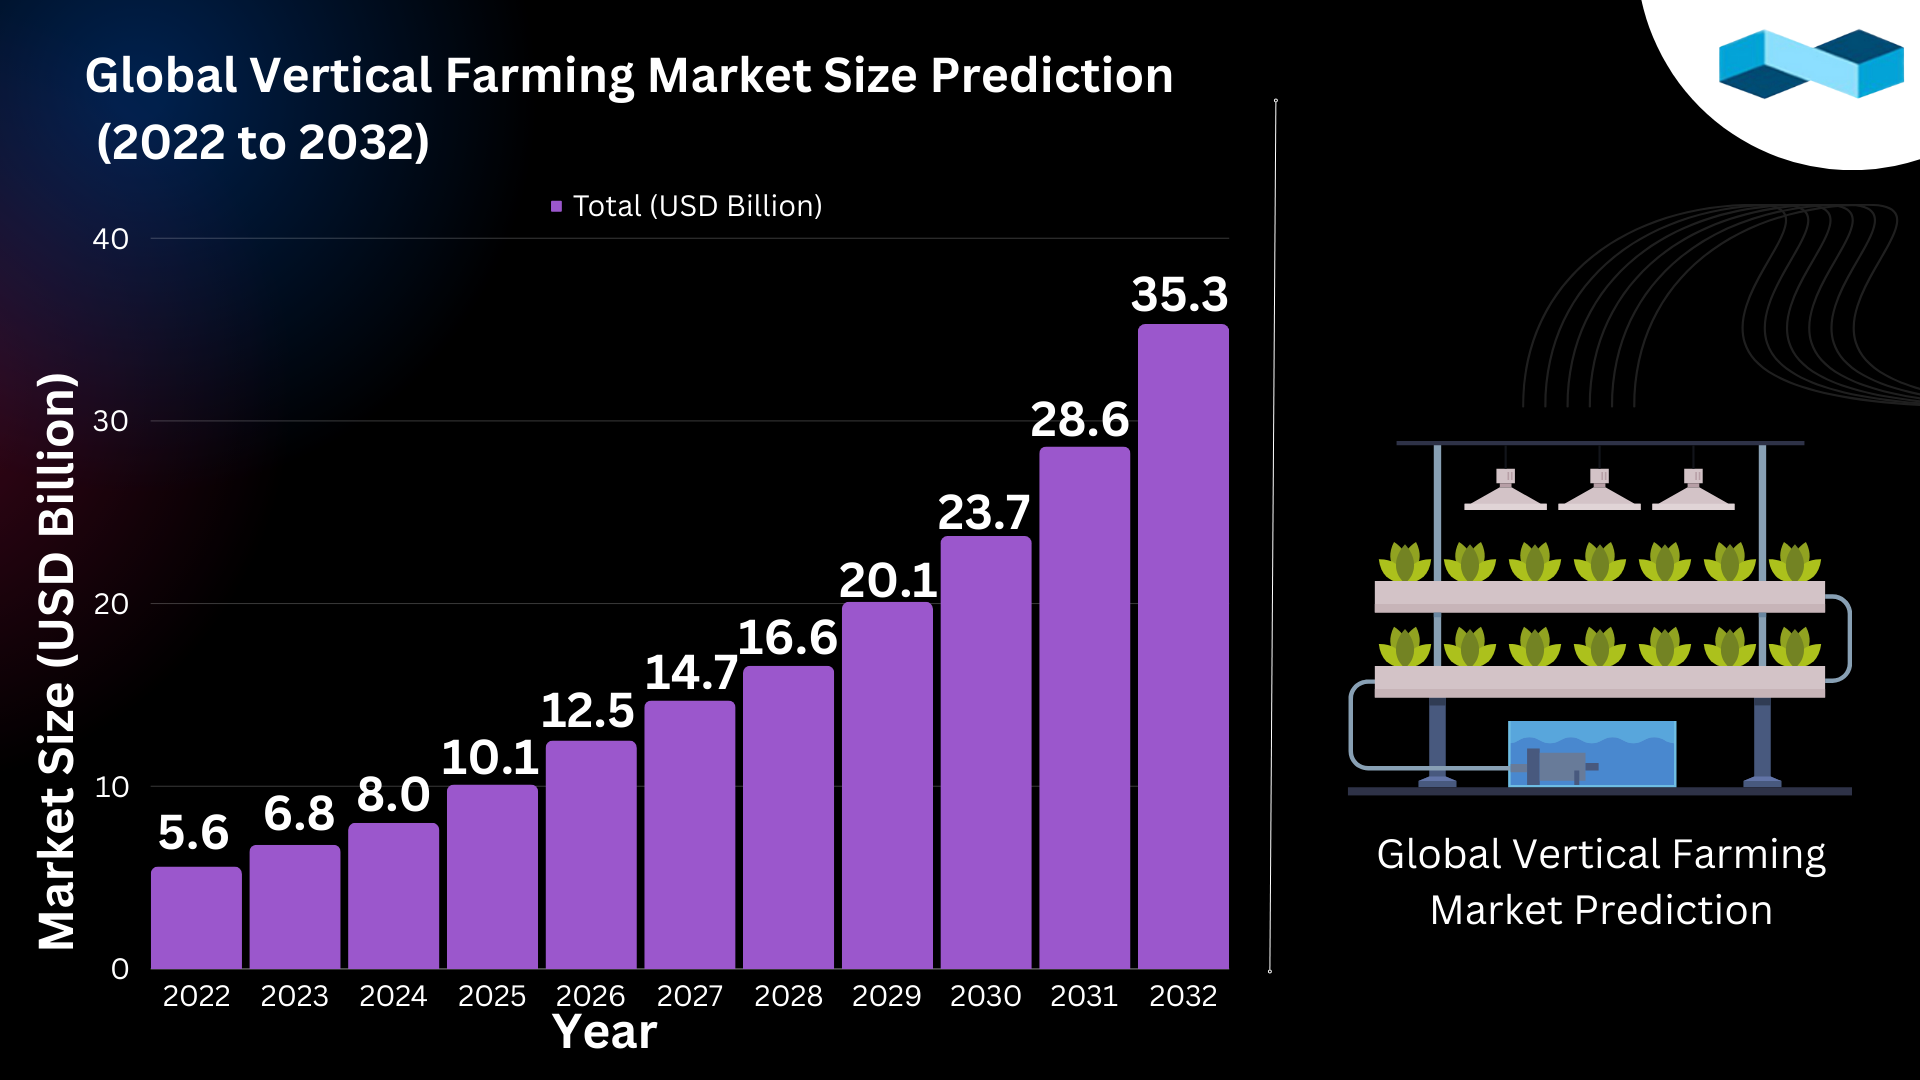 Global Vertical Farming Market Size Prediction